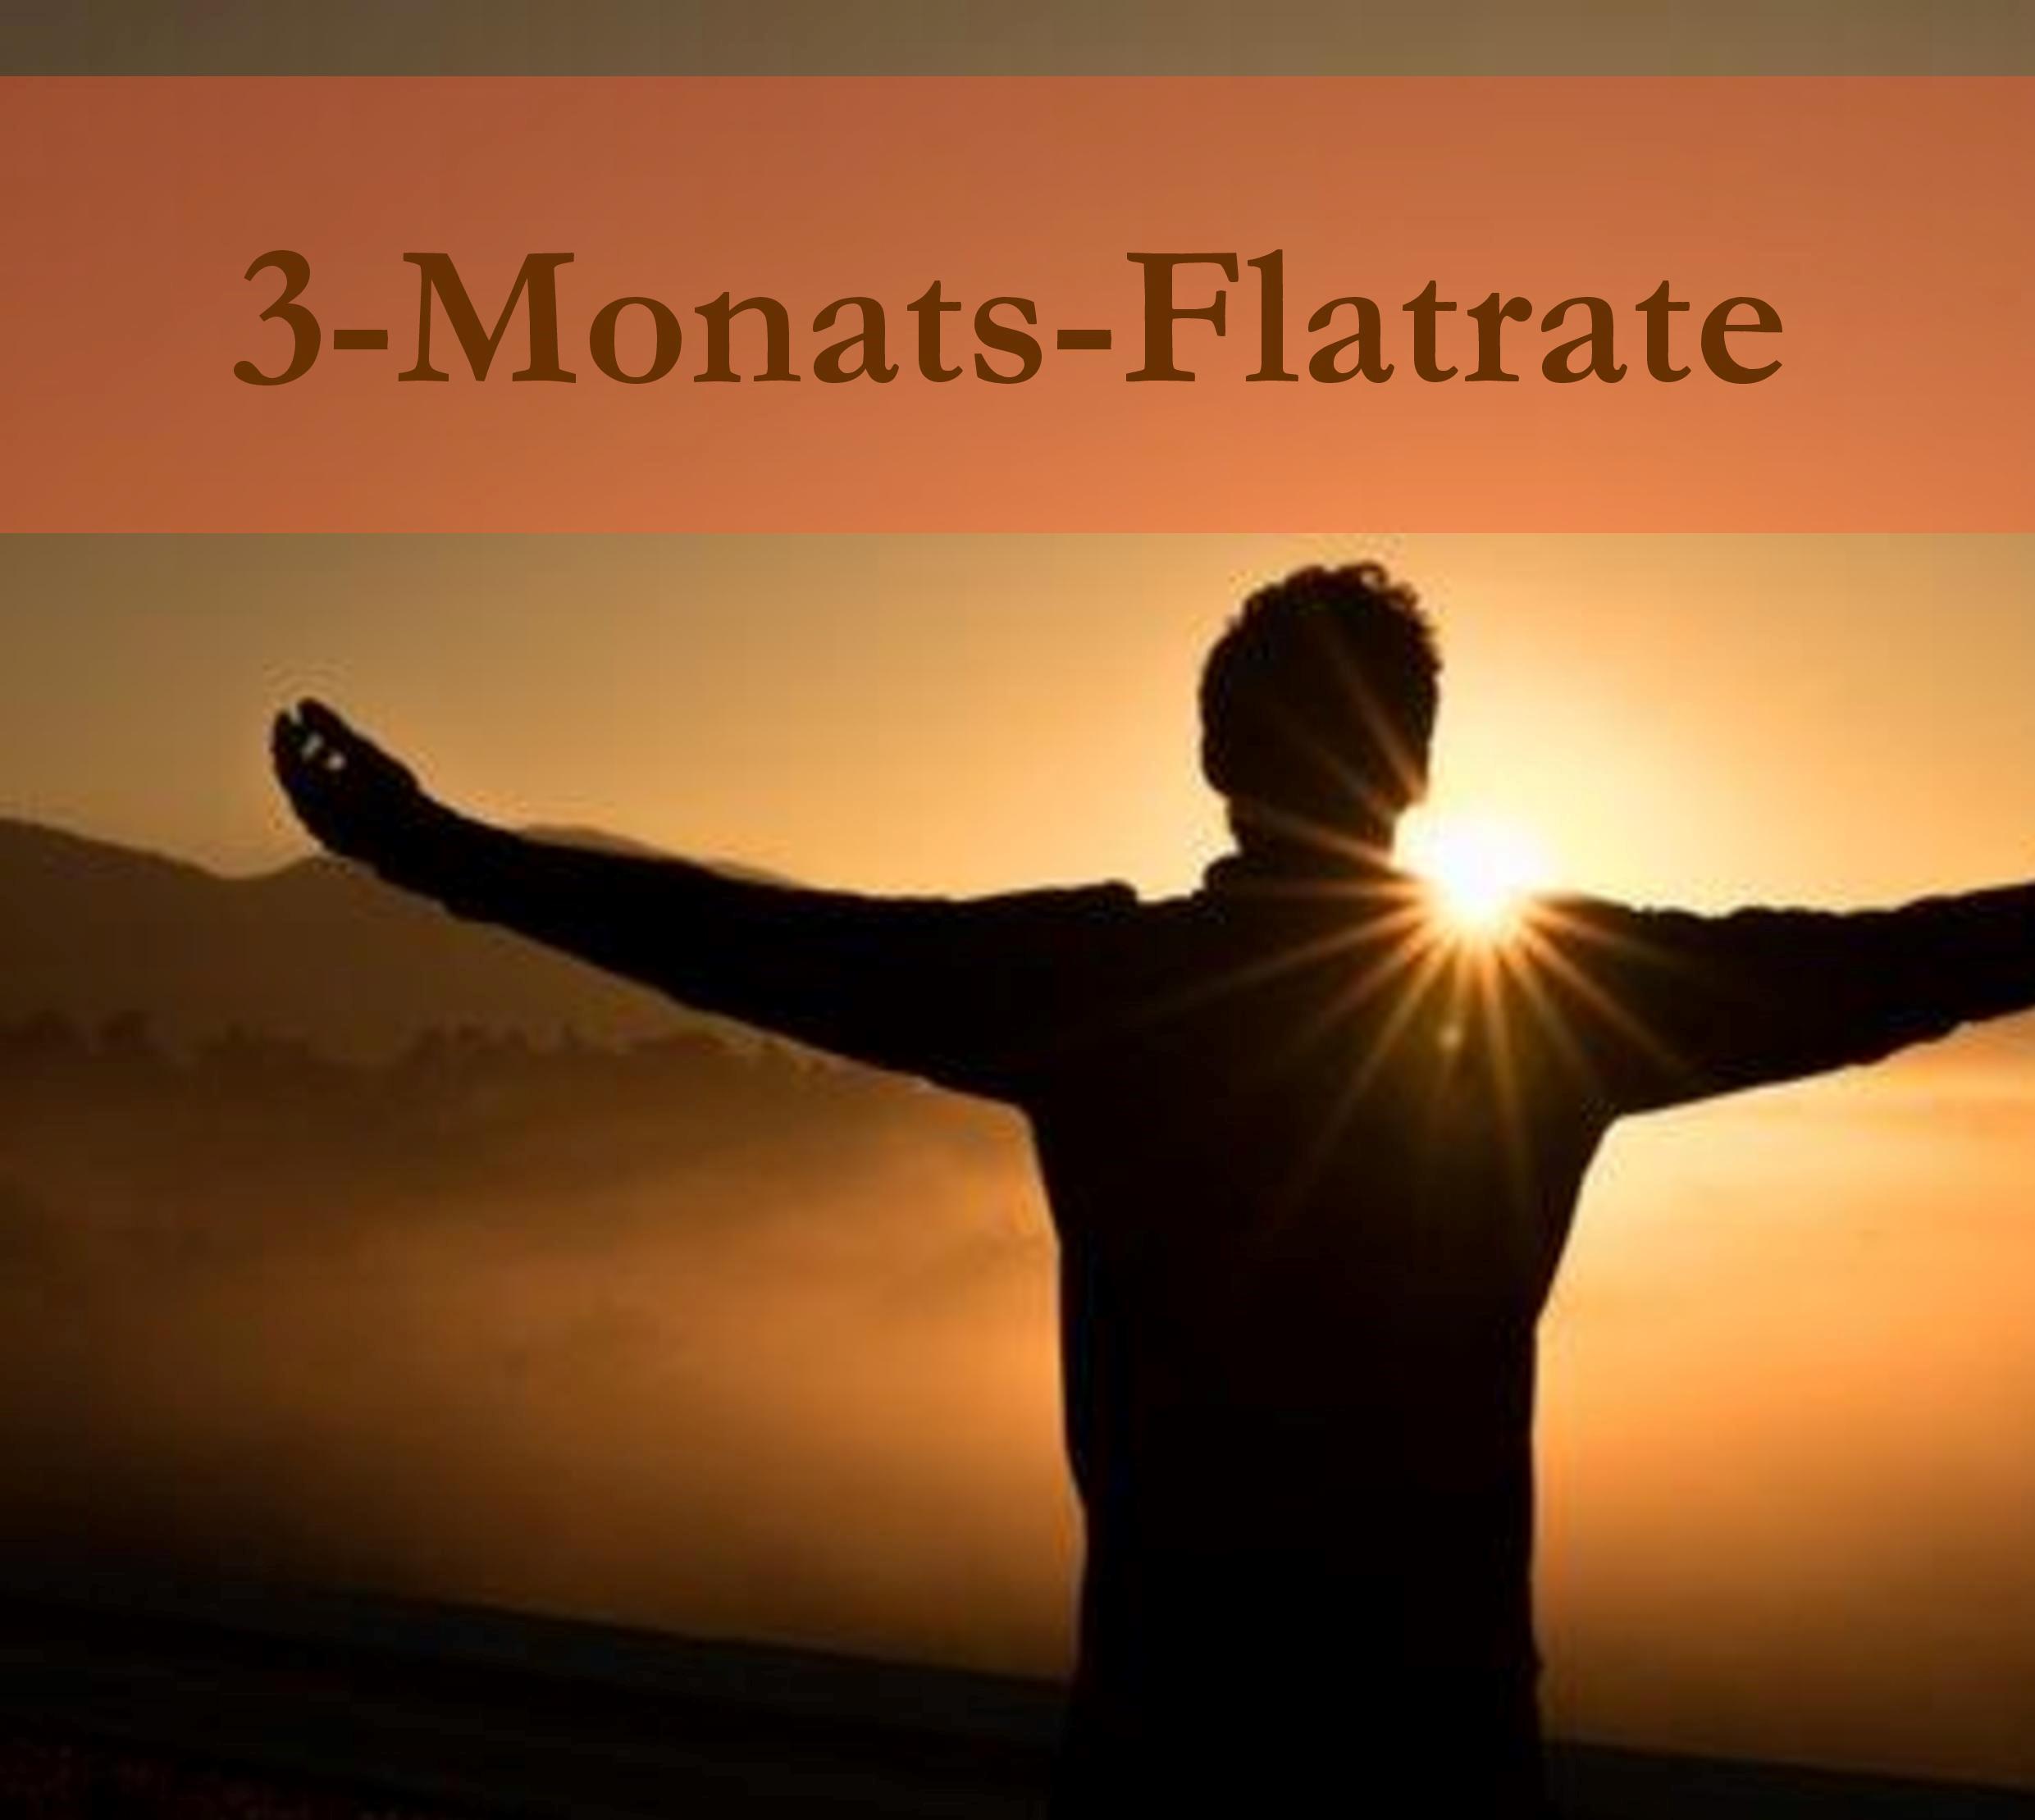 (S)HE 3-Monats-Flatrate